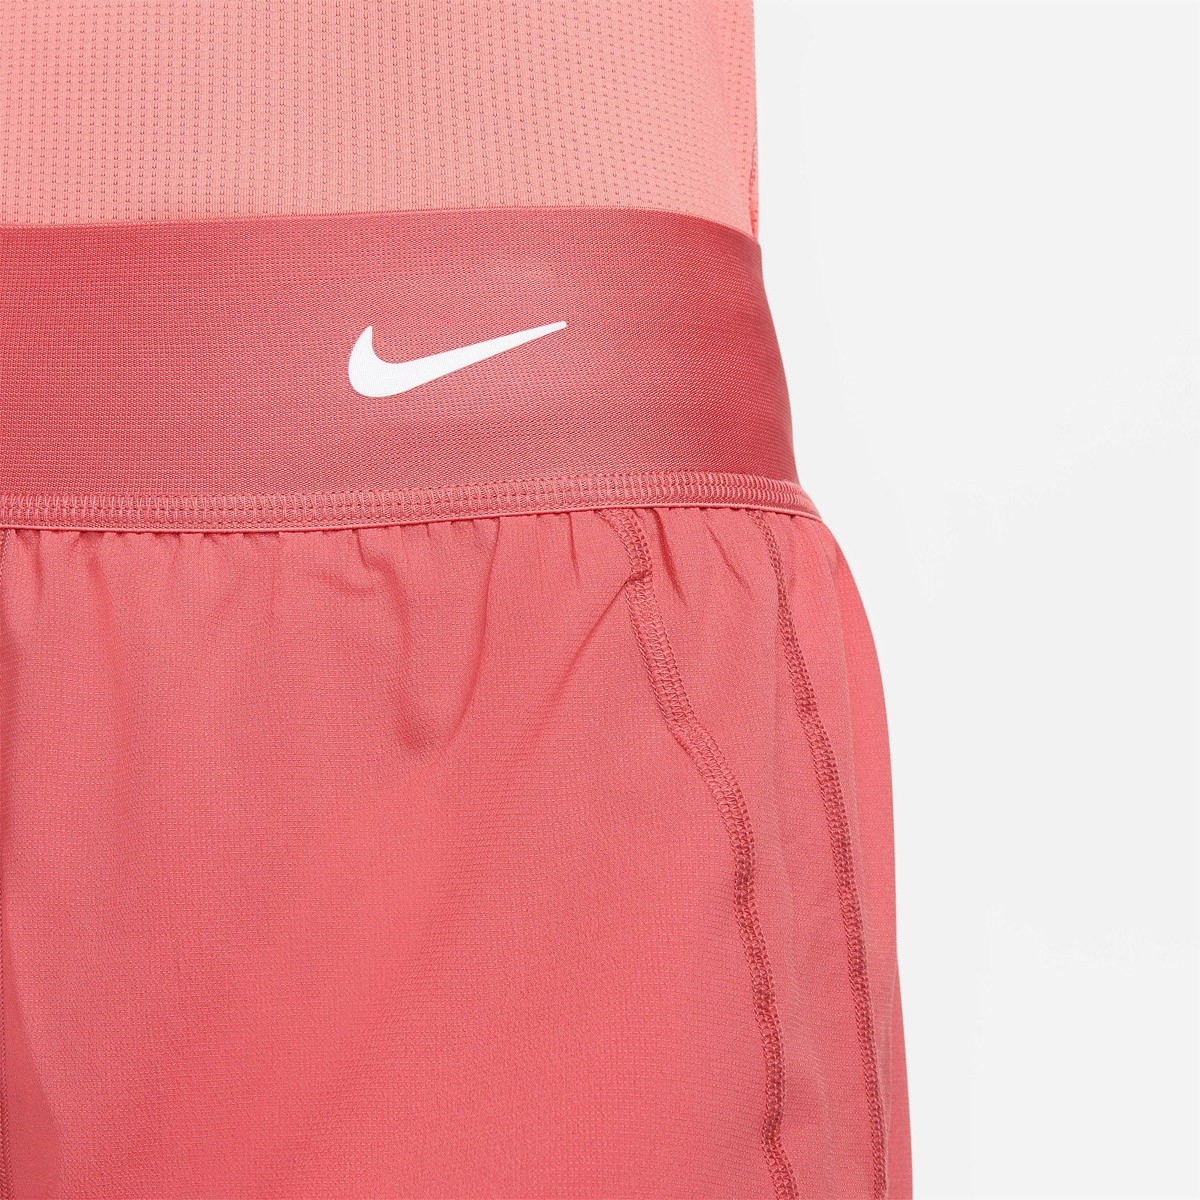 Теннисные шорты женские Nike Court Advantage Short adobe/white